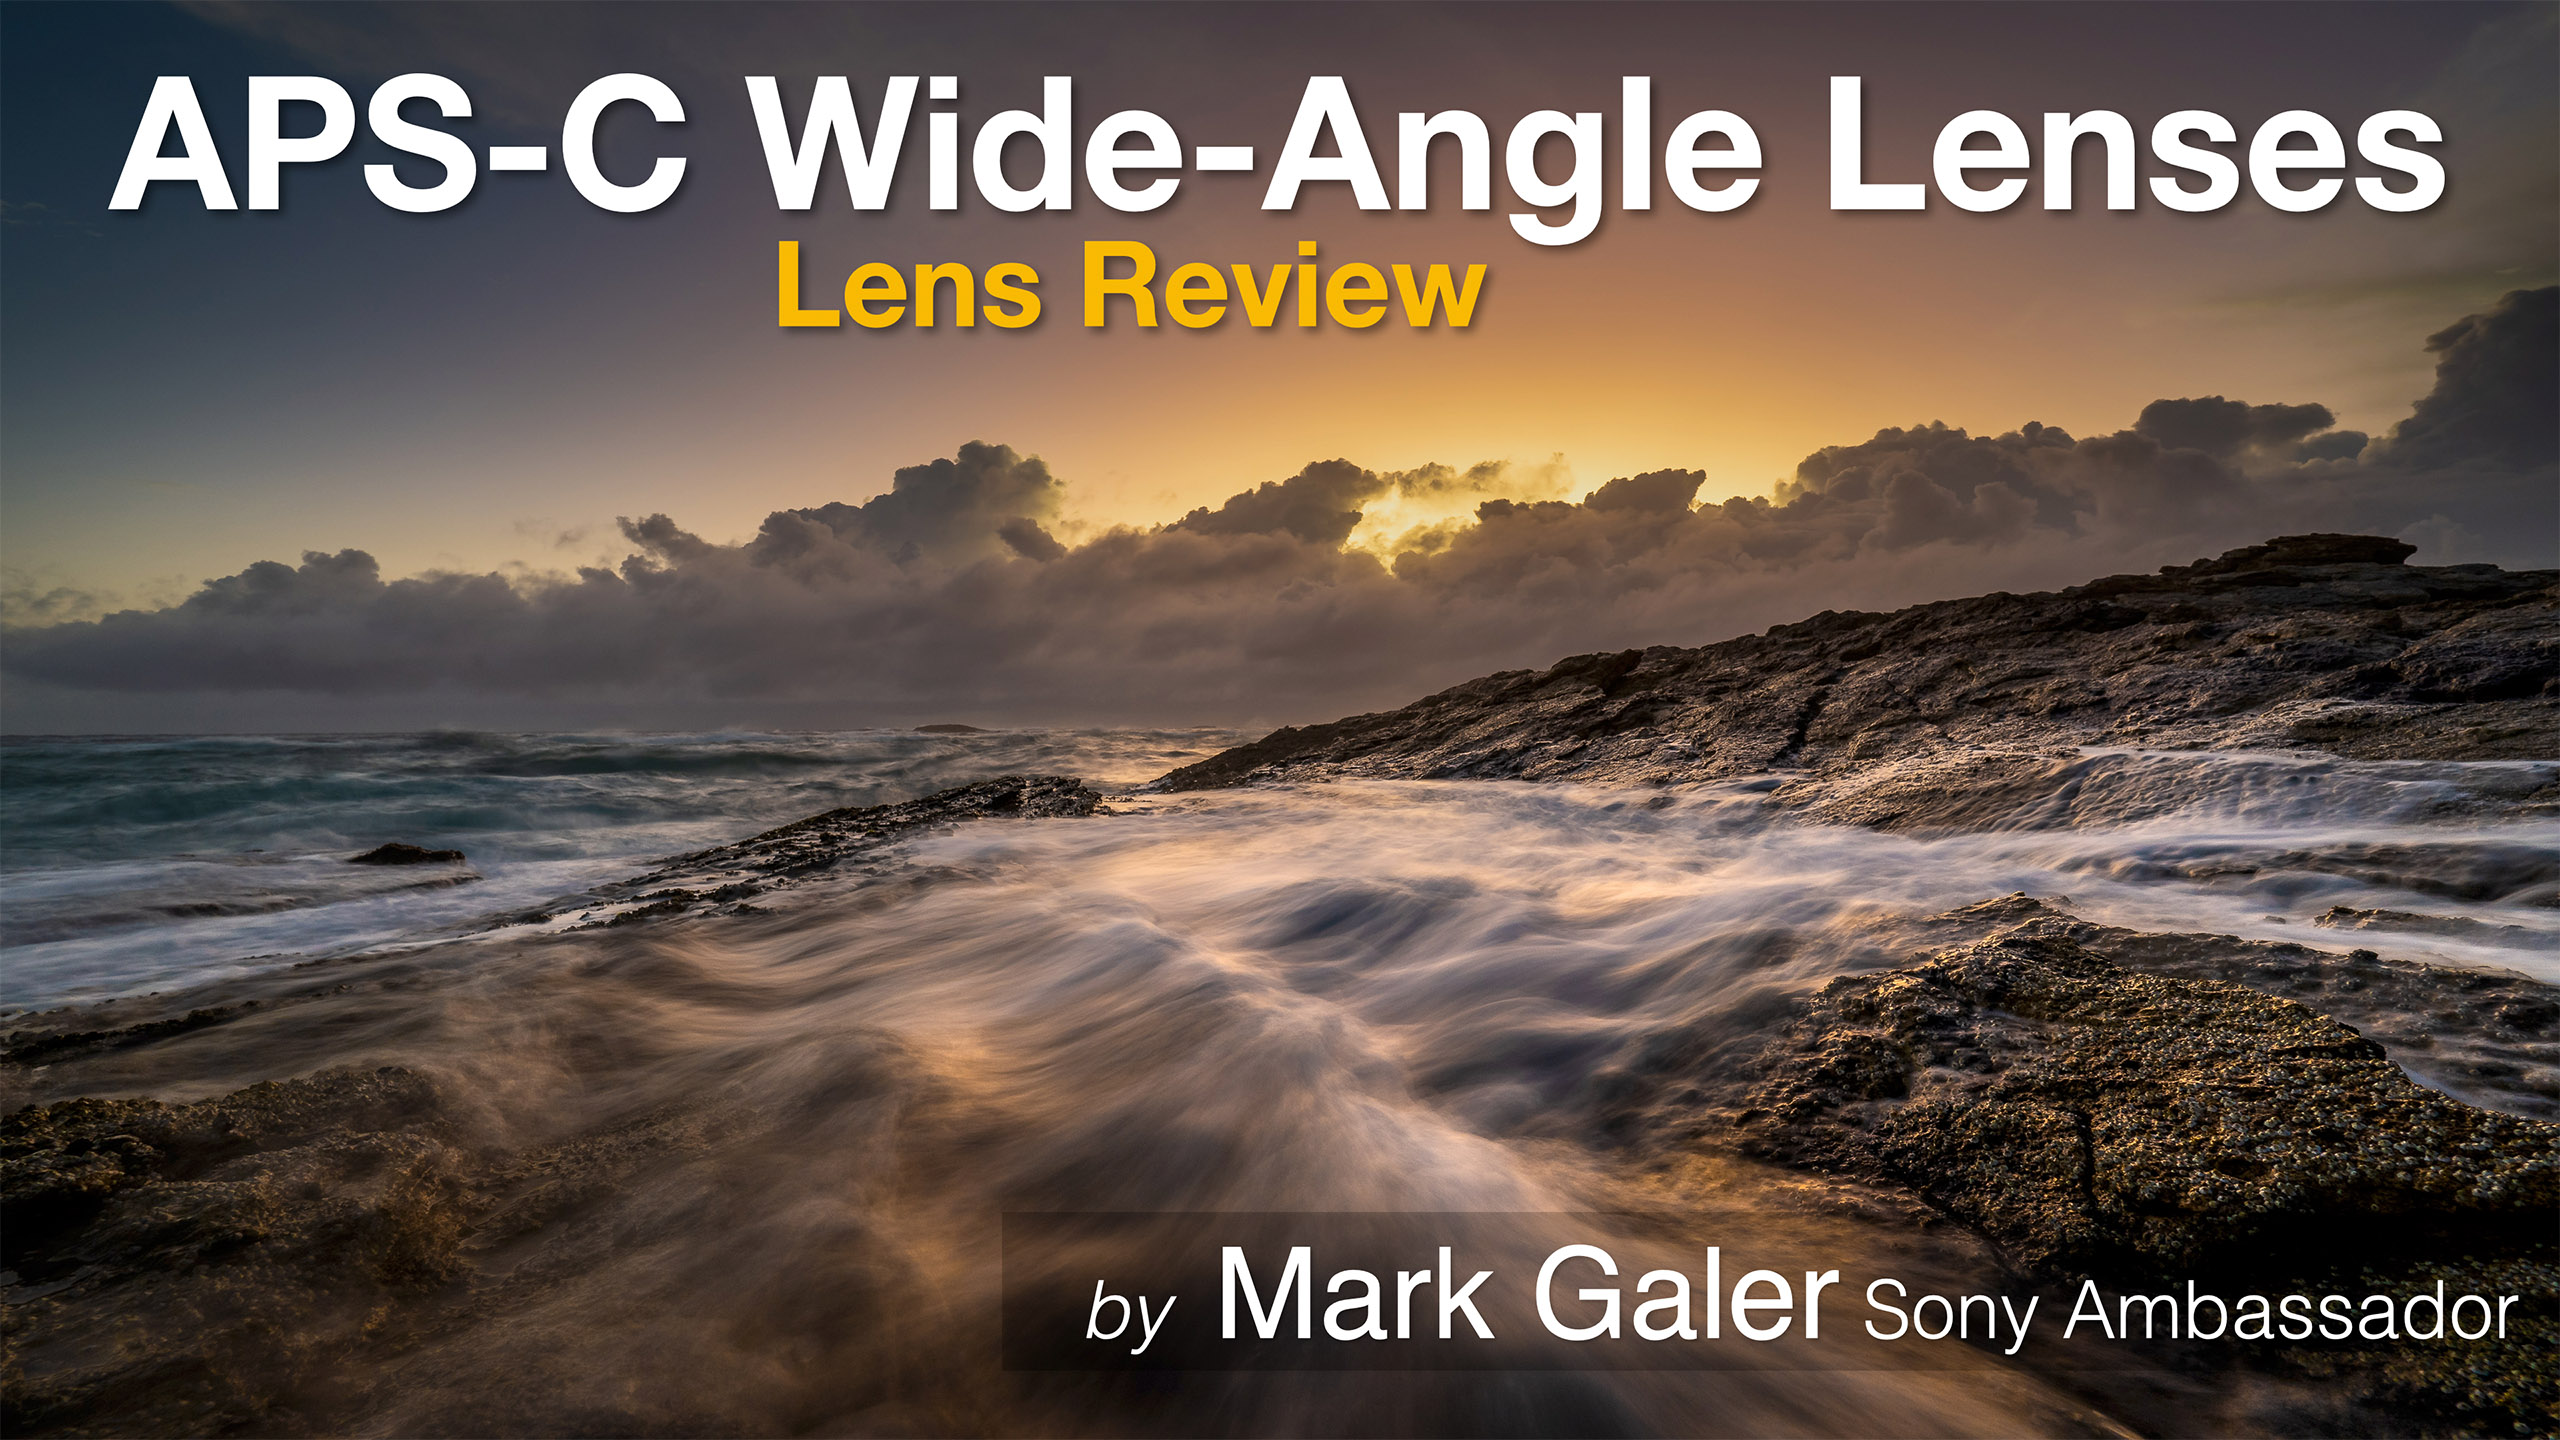 A6700 Camera Review - Mark Galer